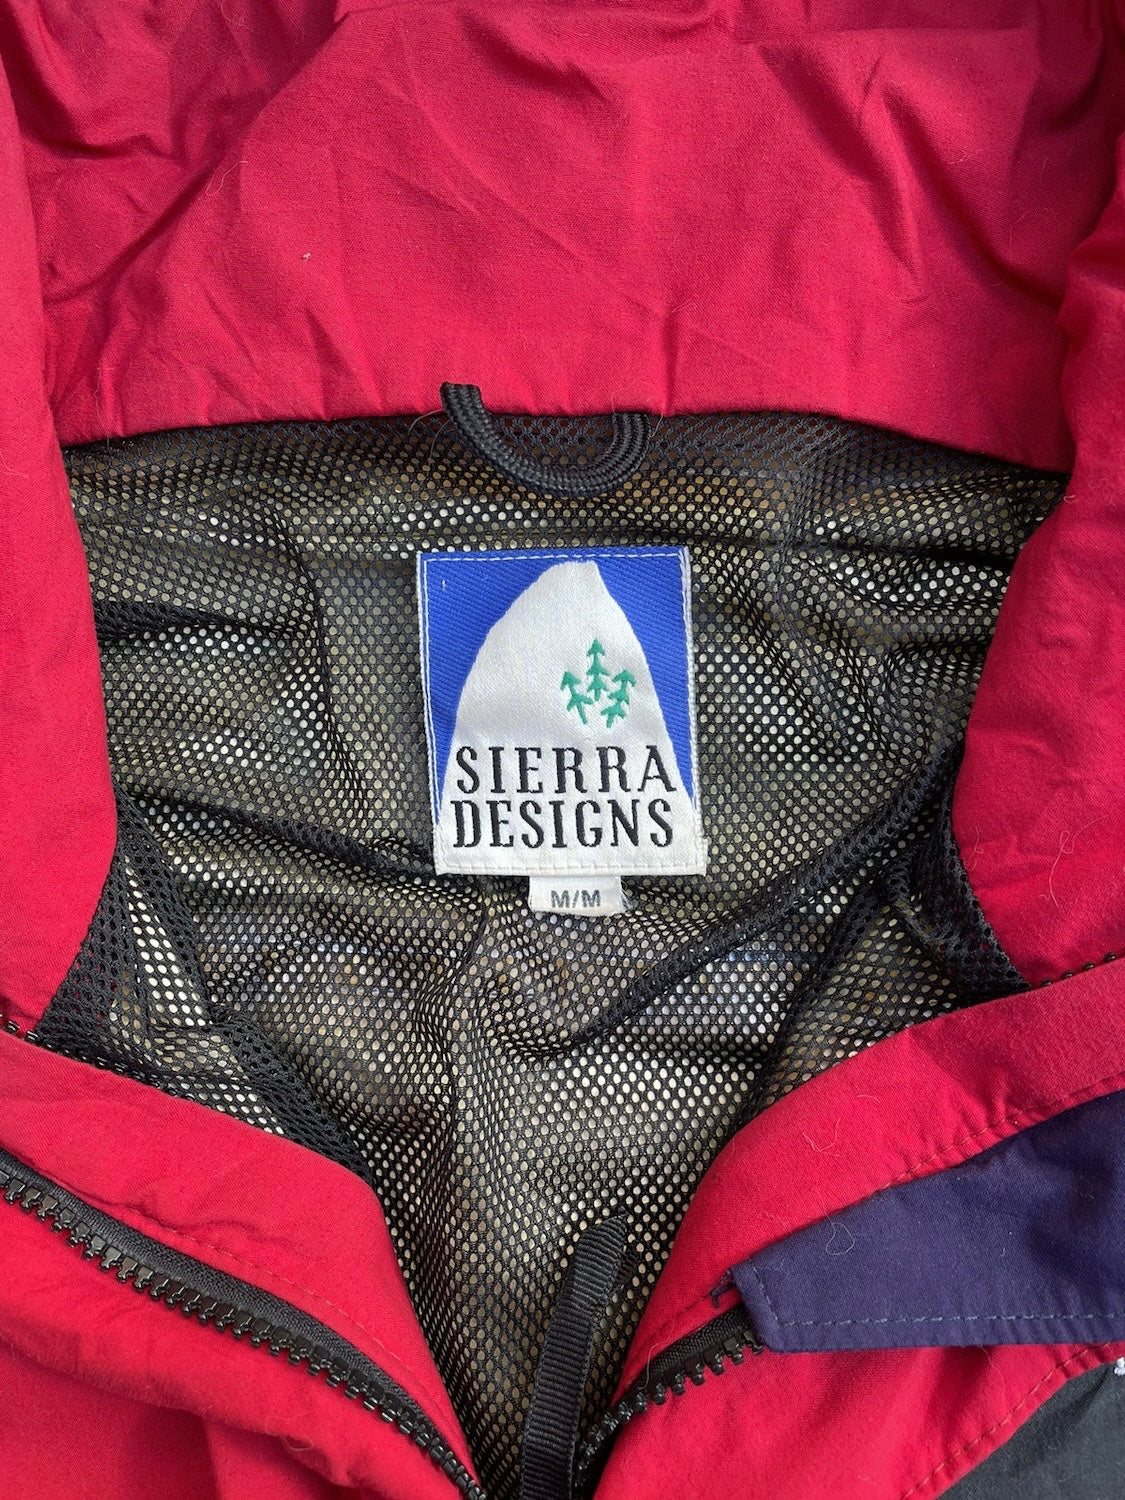 1990's Sierra Designs Goretex Shell Jacket - M